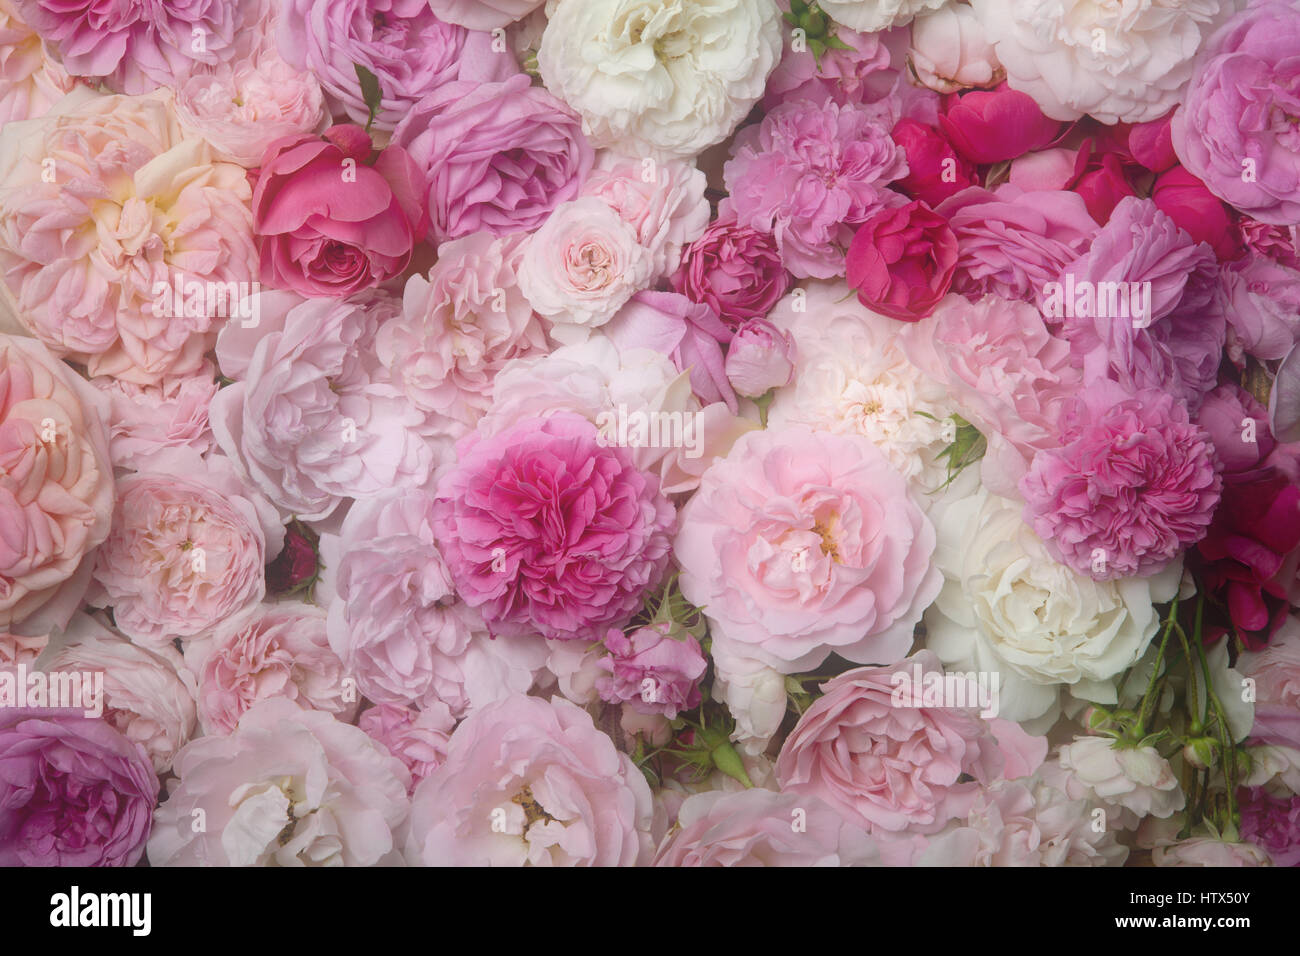 Image de fond rose vintage roses. Banque D'Images